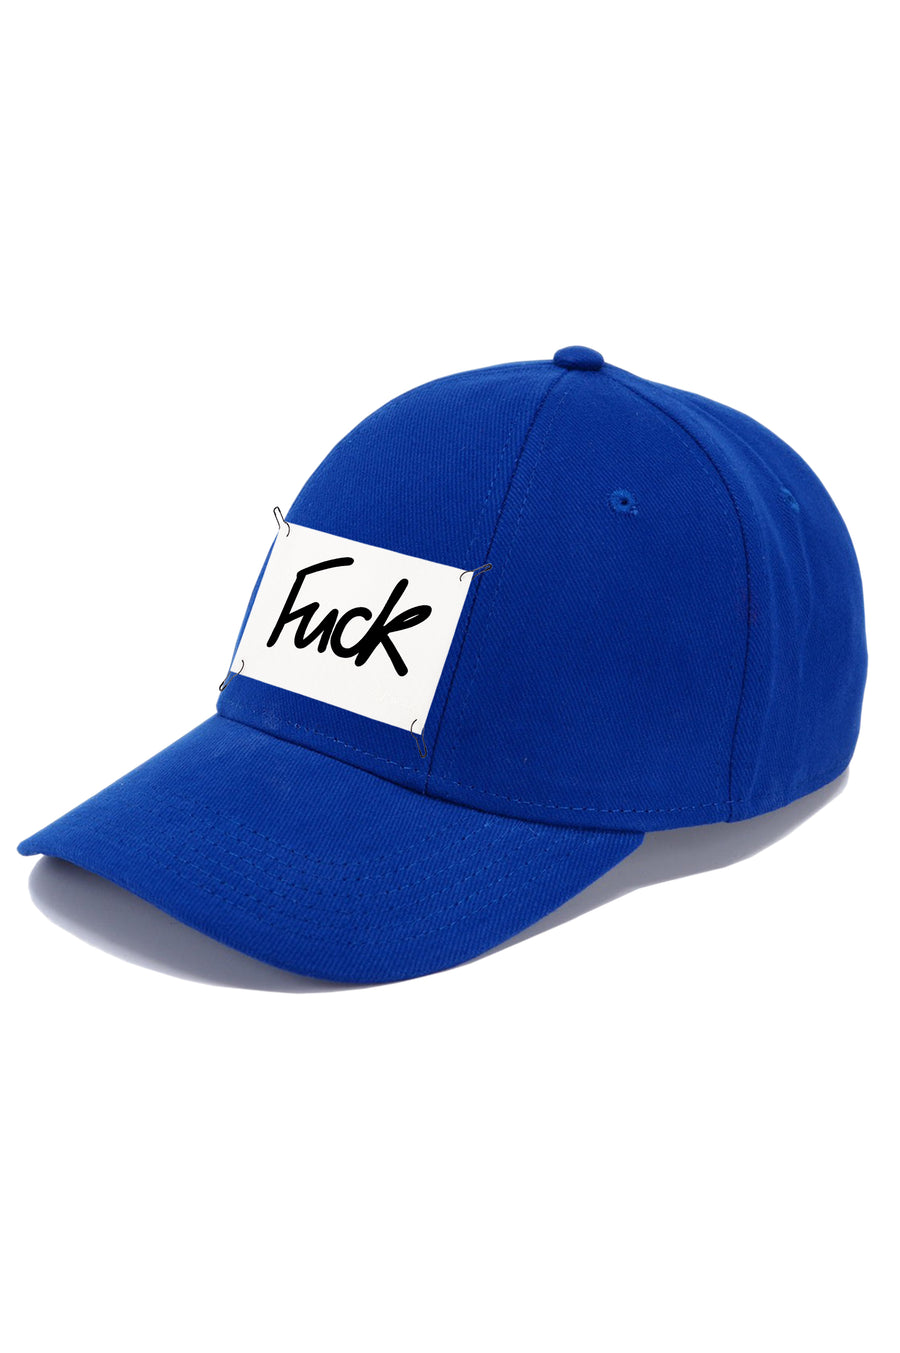 Baseball cap with detachable print